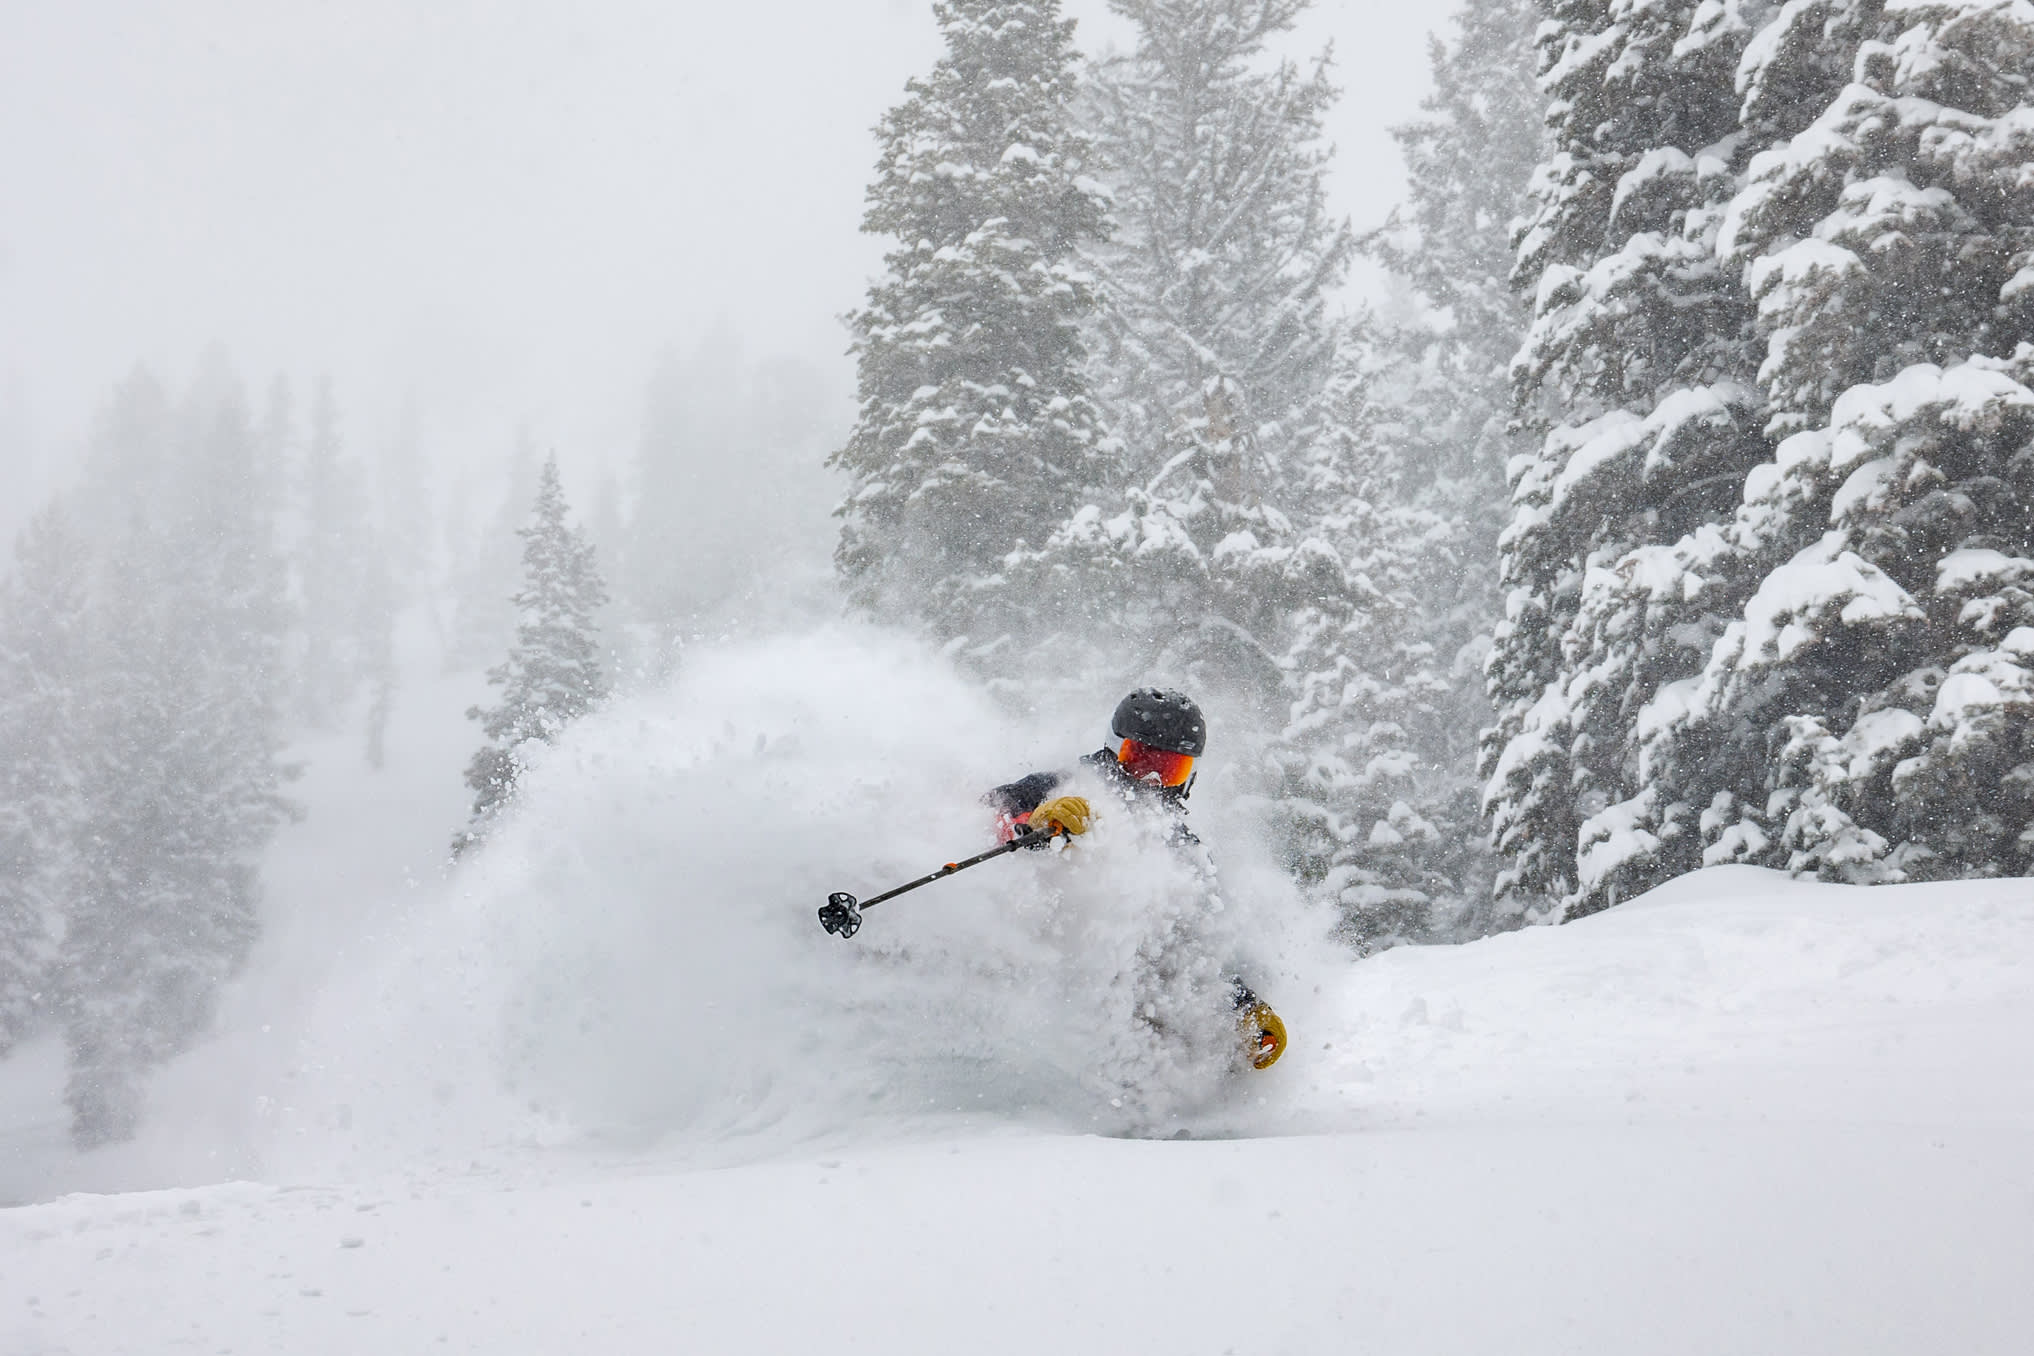 Evan Thayer skis deep powder in April